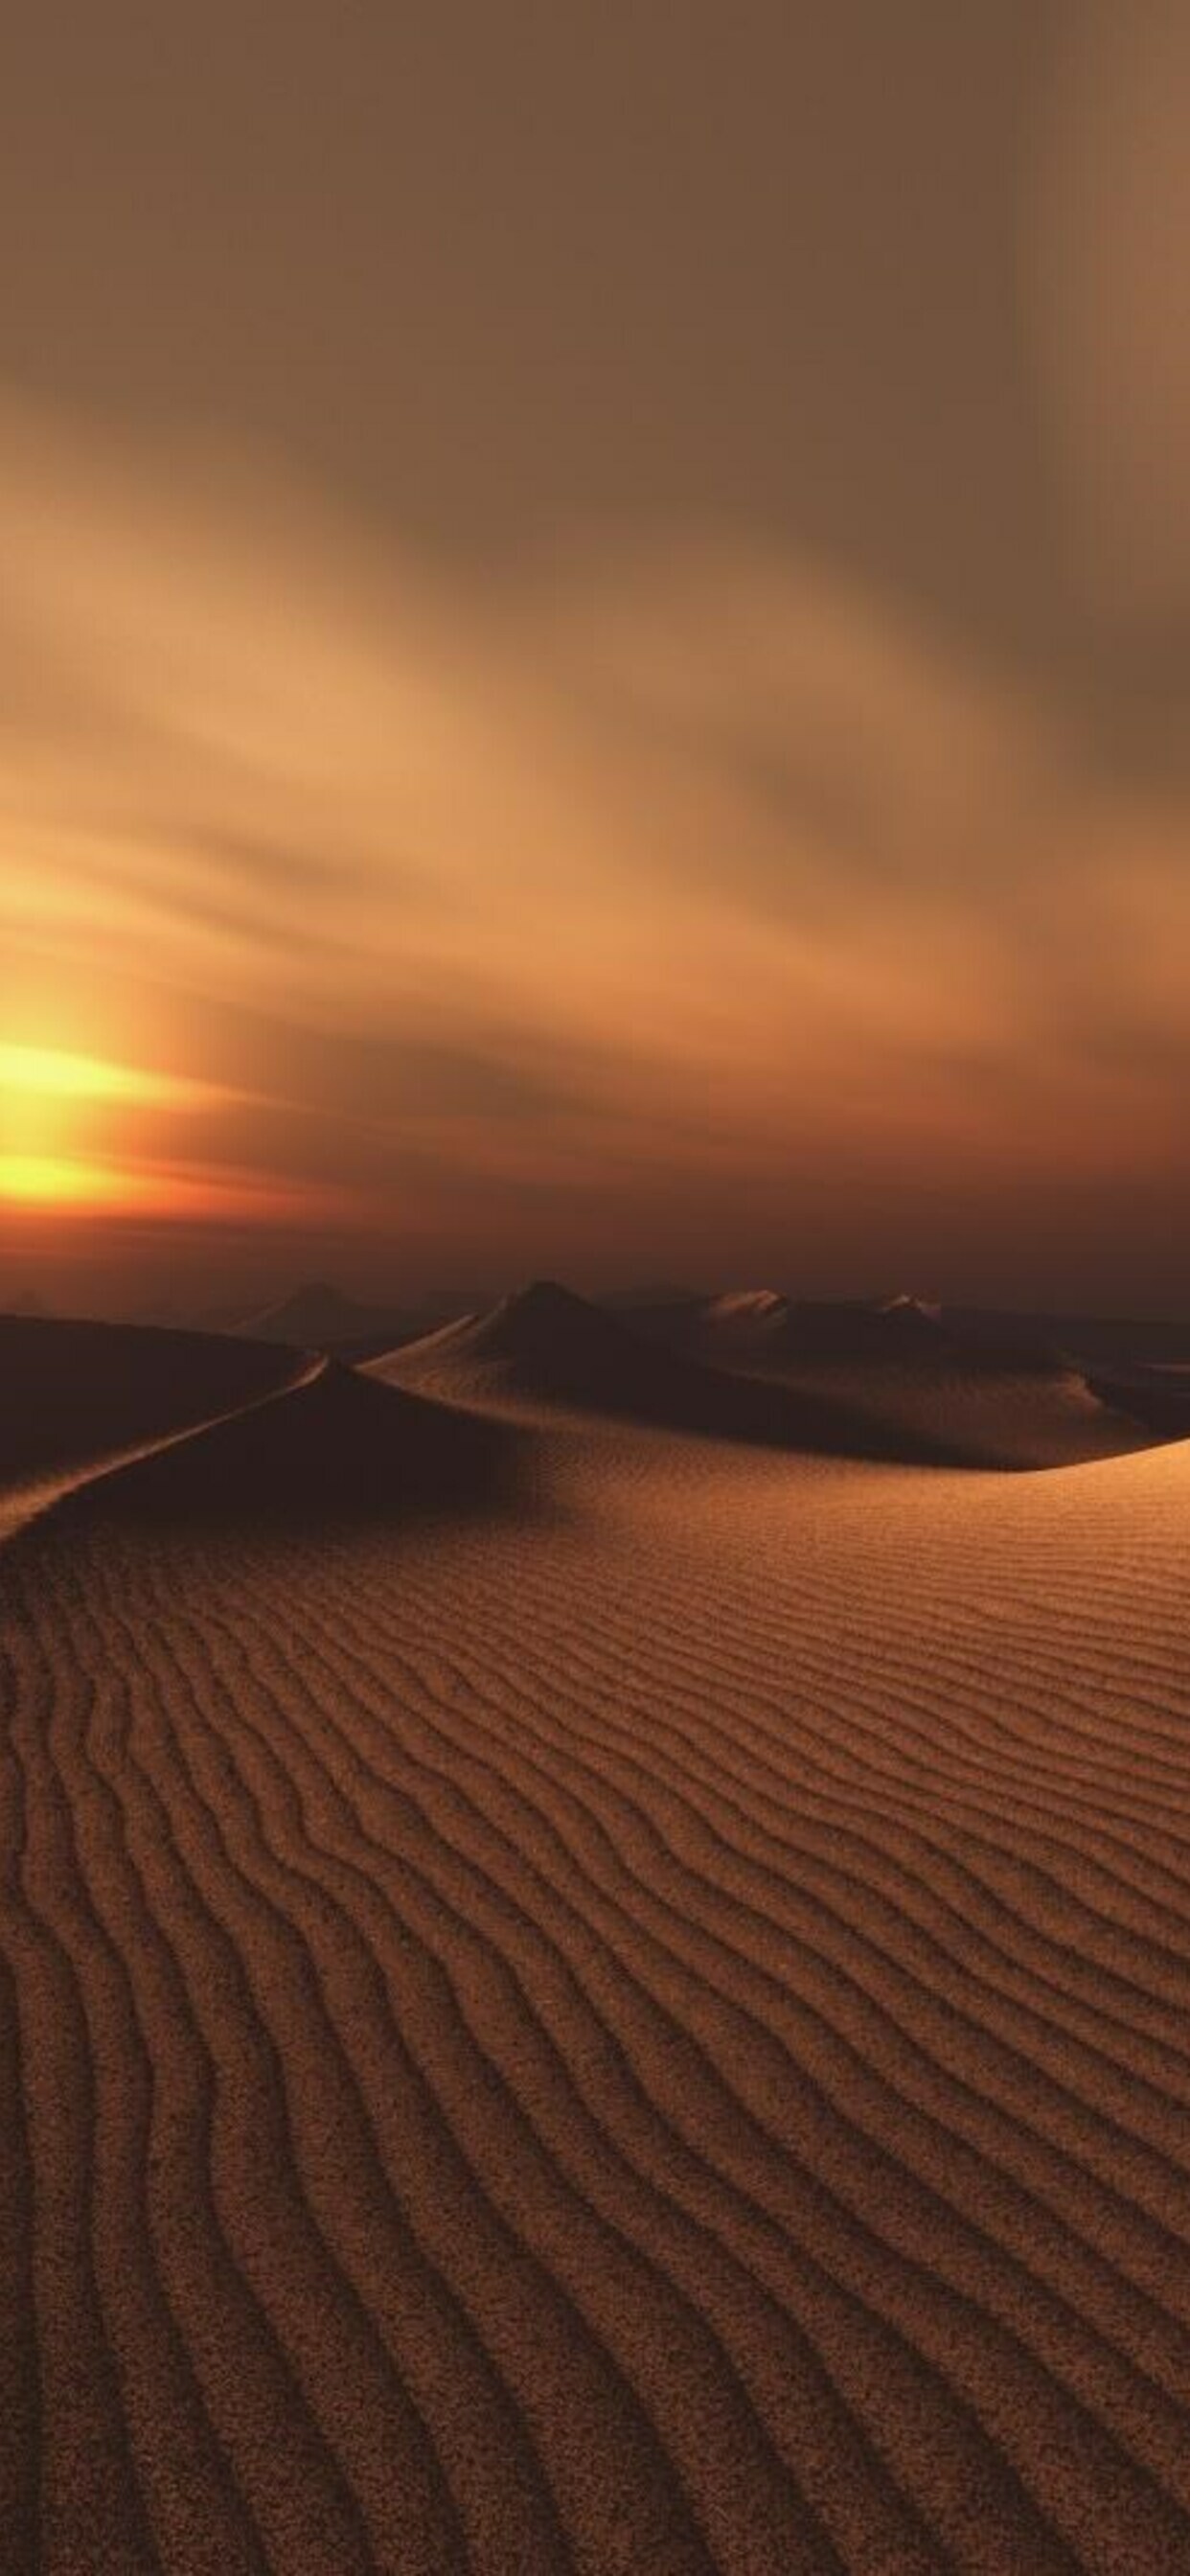 Desert: Ripple marks, Sand, Natural landscape. 1250x2690 HD Wallpaper.